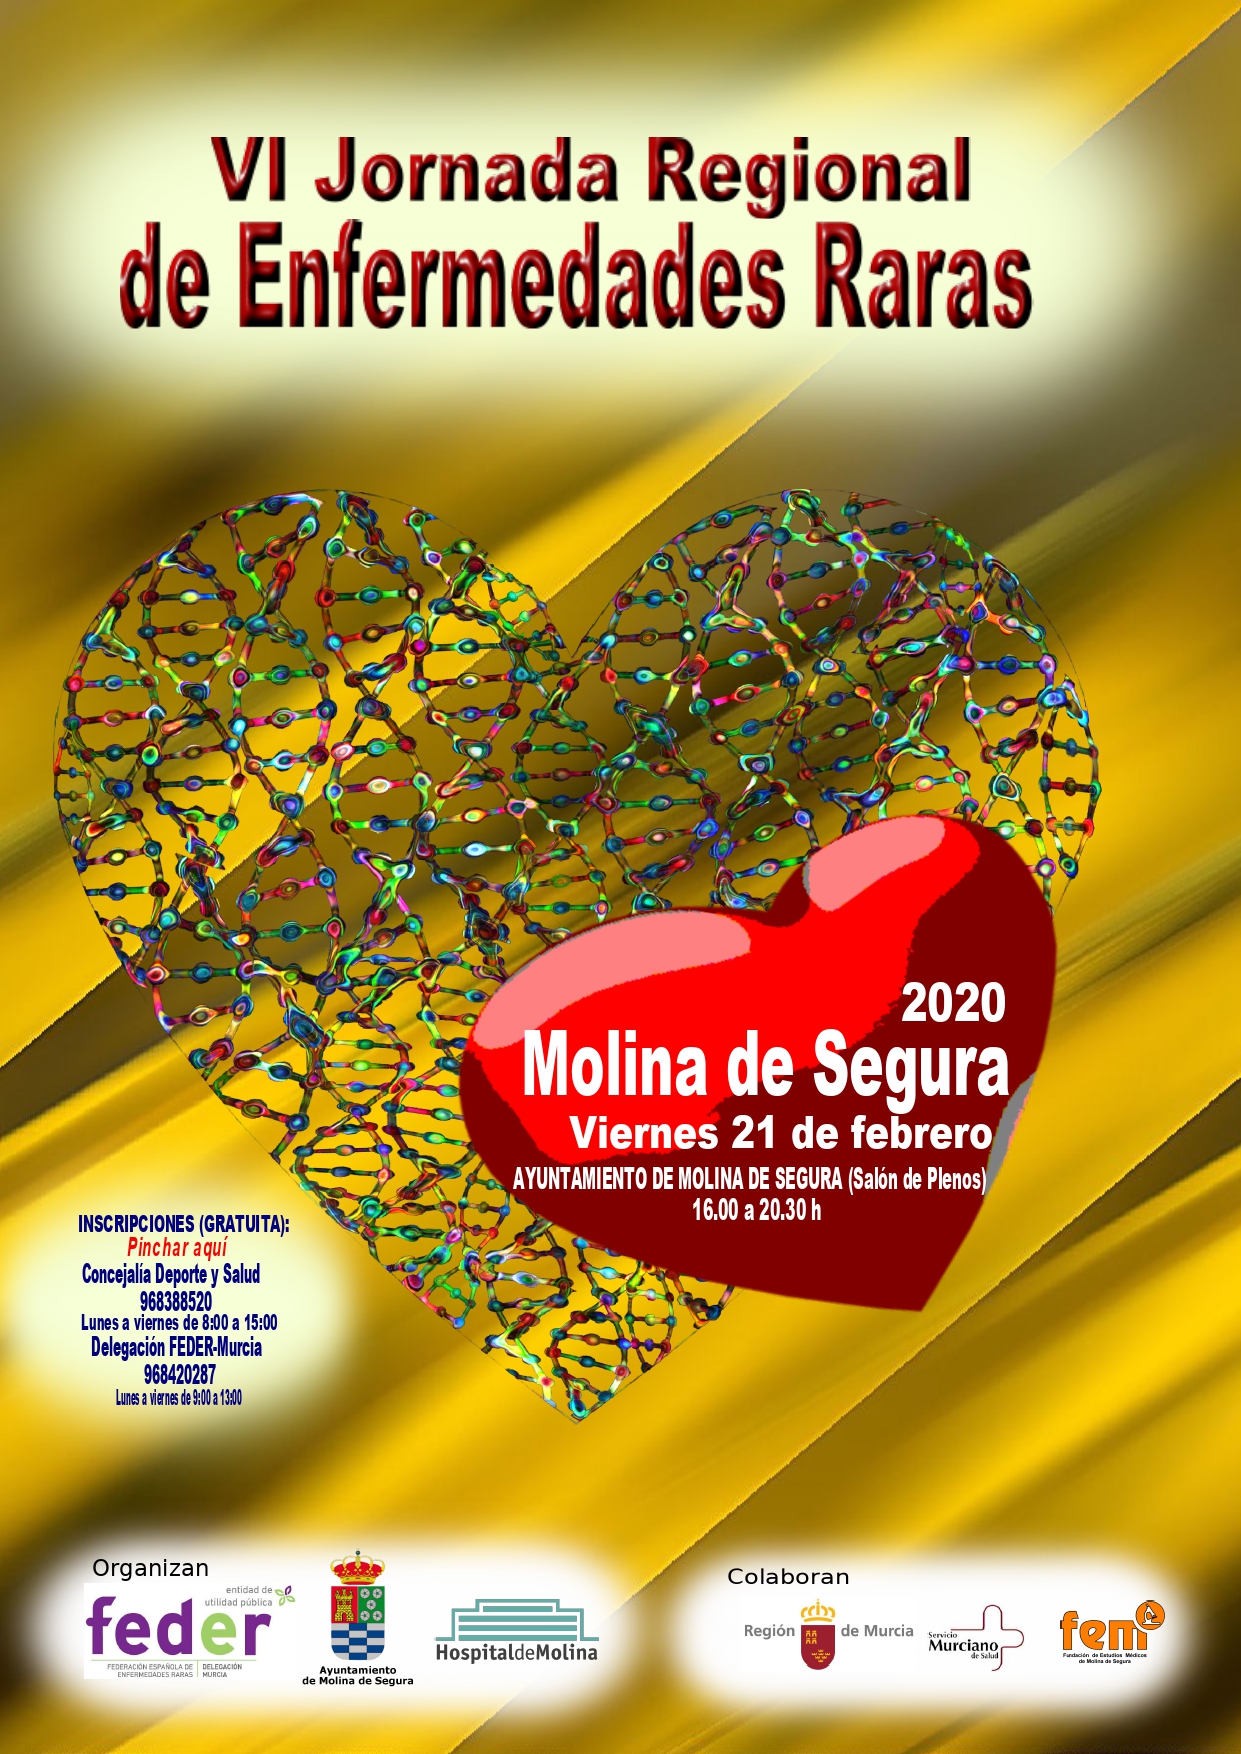 Salud Pblica-Molina-VI Jornada Regional de Enfermedades Raras 2020-FOLLETO 2_page-0001.jpg